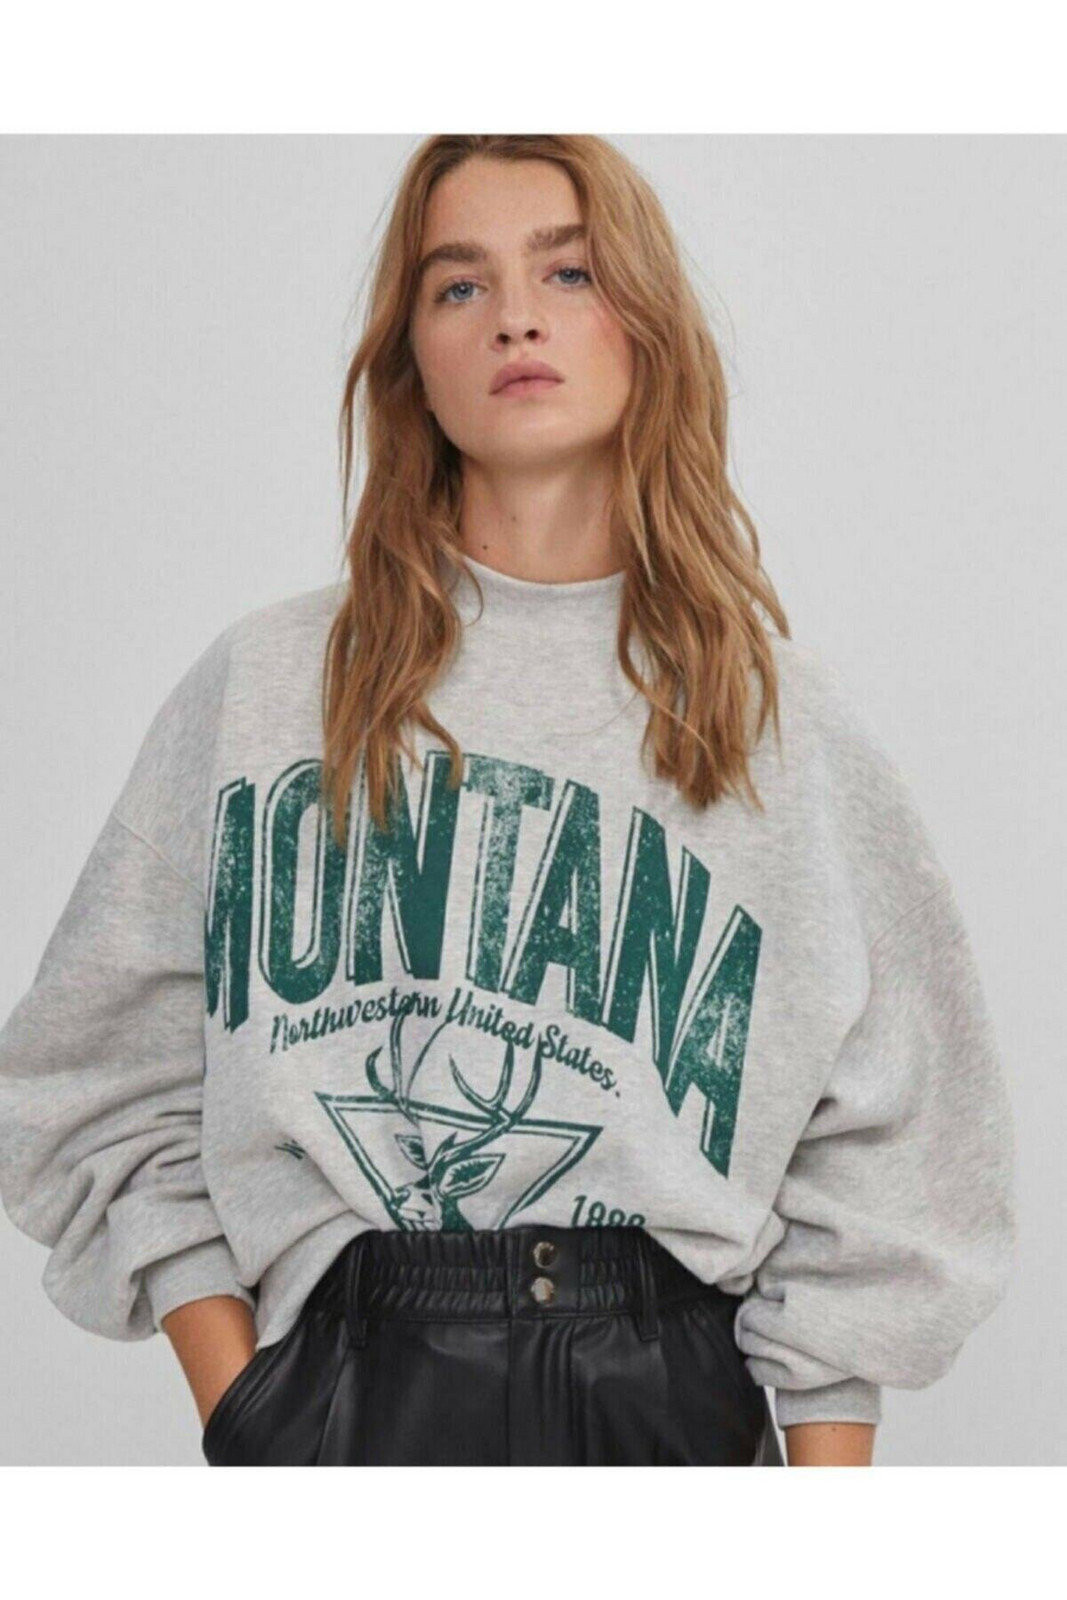 Know Twentyone Gray Womens Montana Oversize Sweatshirt Hoodie.